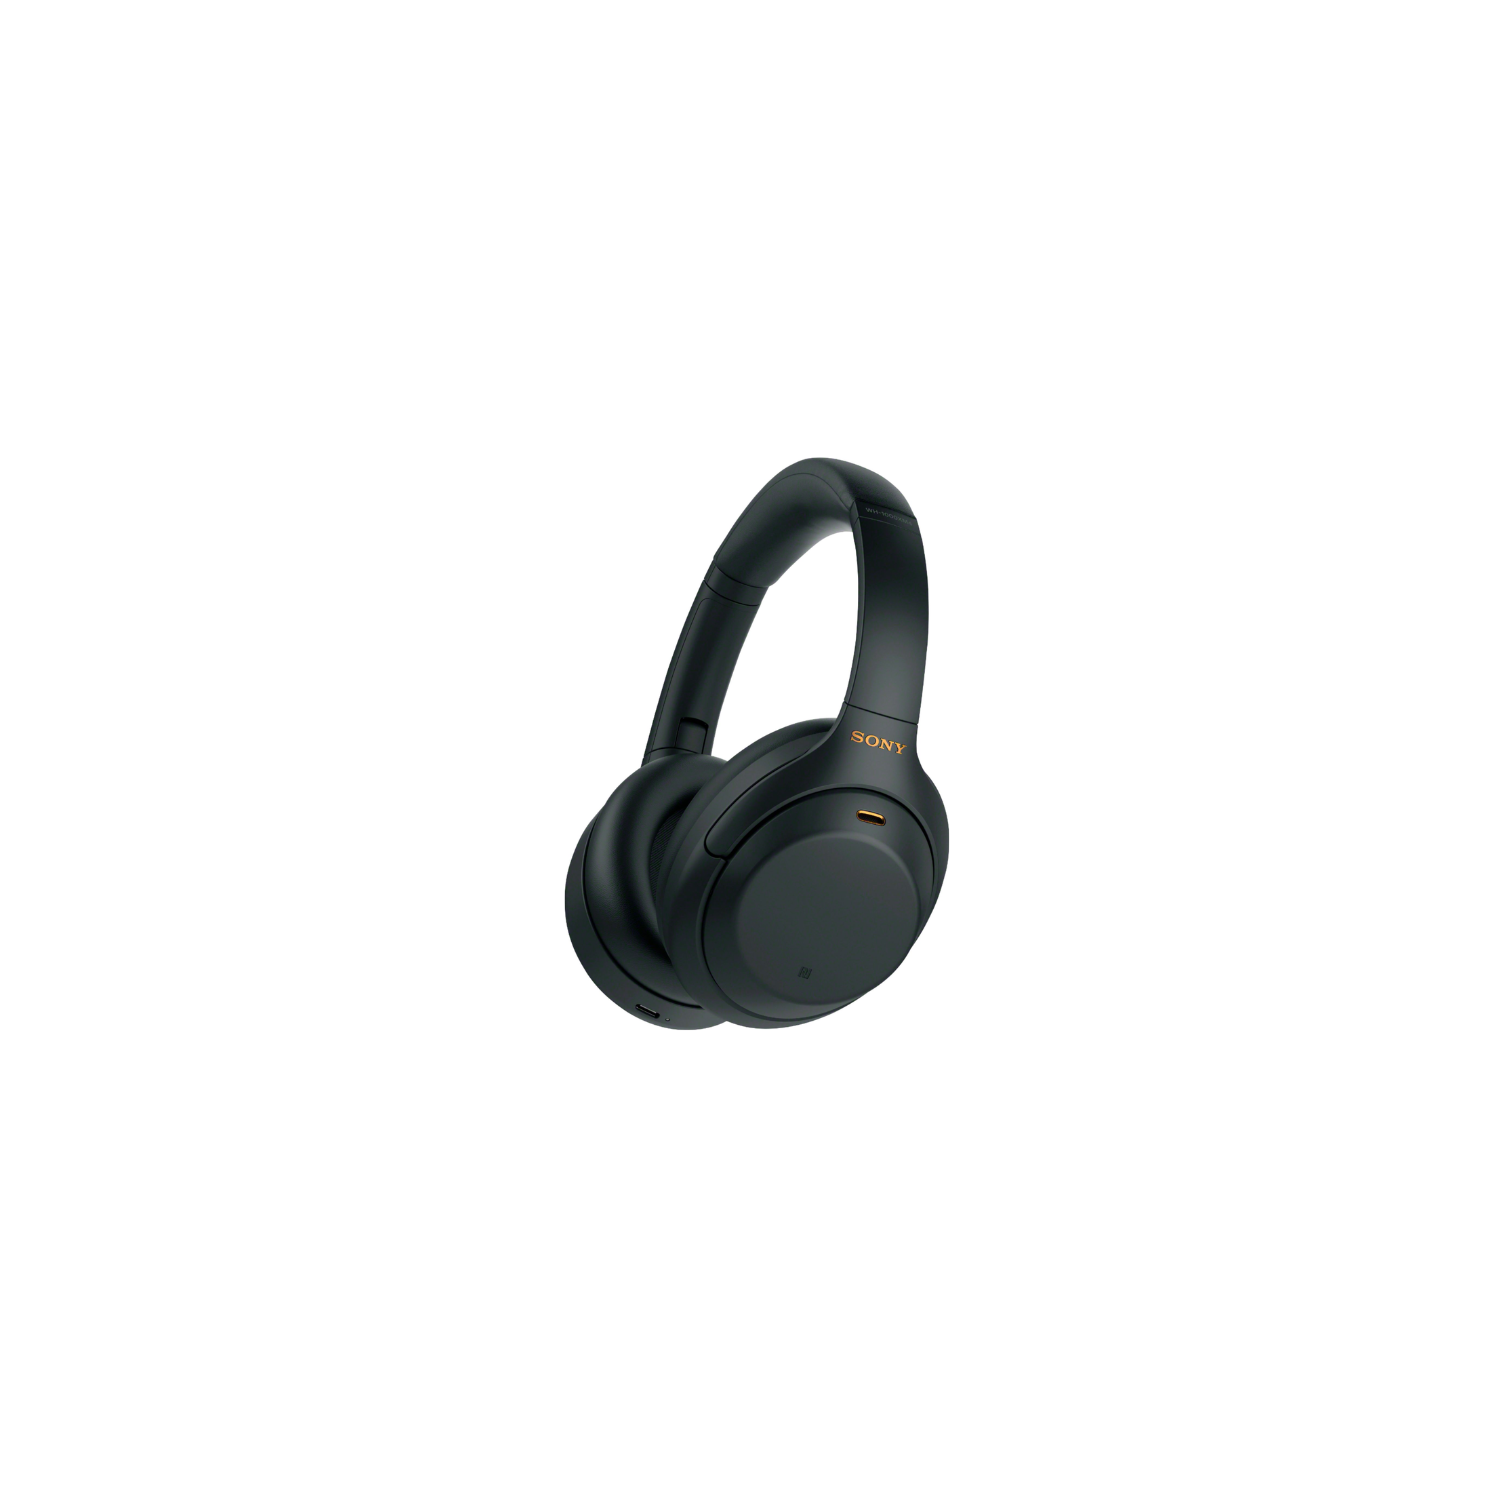 Sony WH-1000XM4 Wireless Industry Leading Noise Canceling Overhead Headphones (Black) (Open Box)